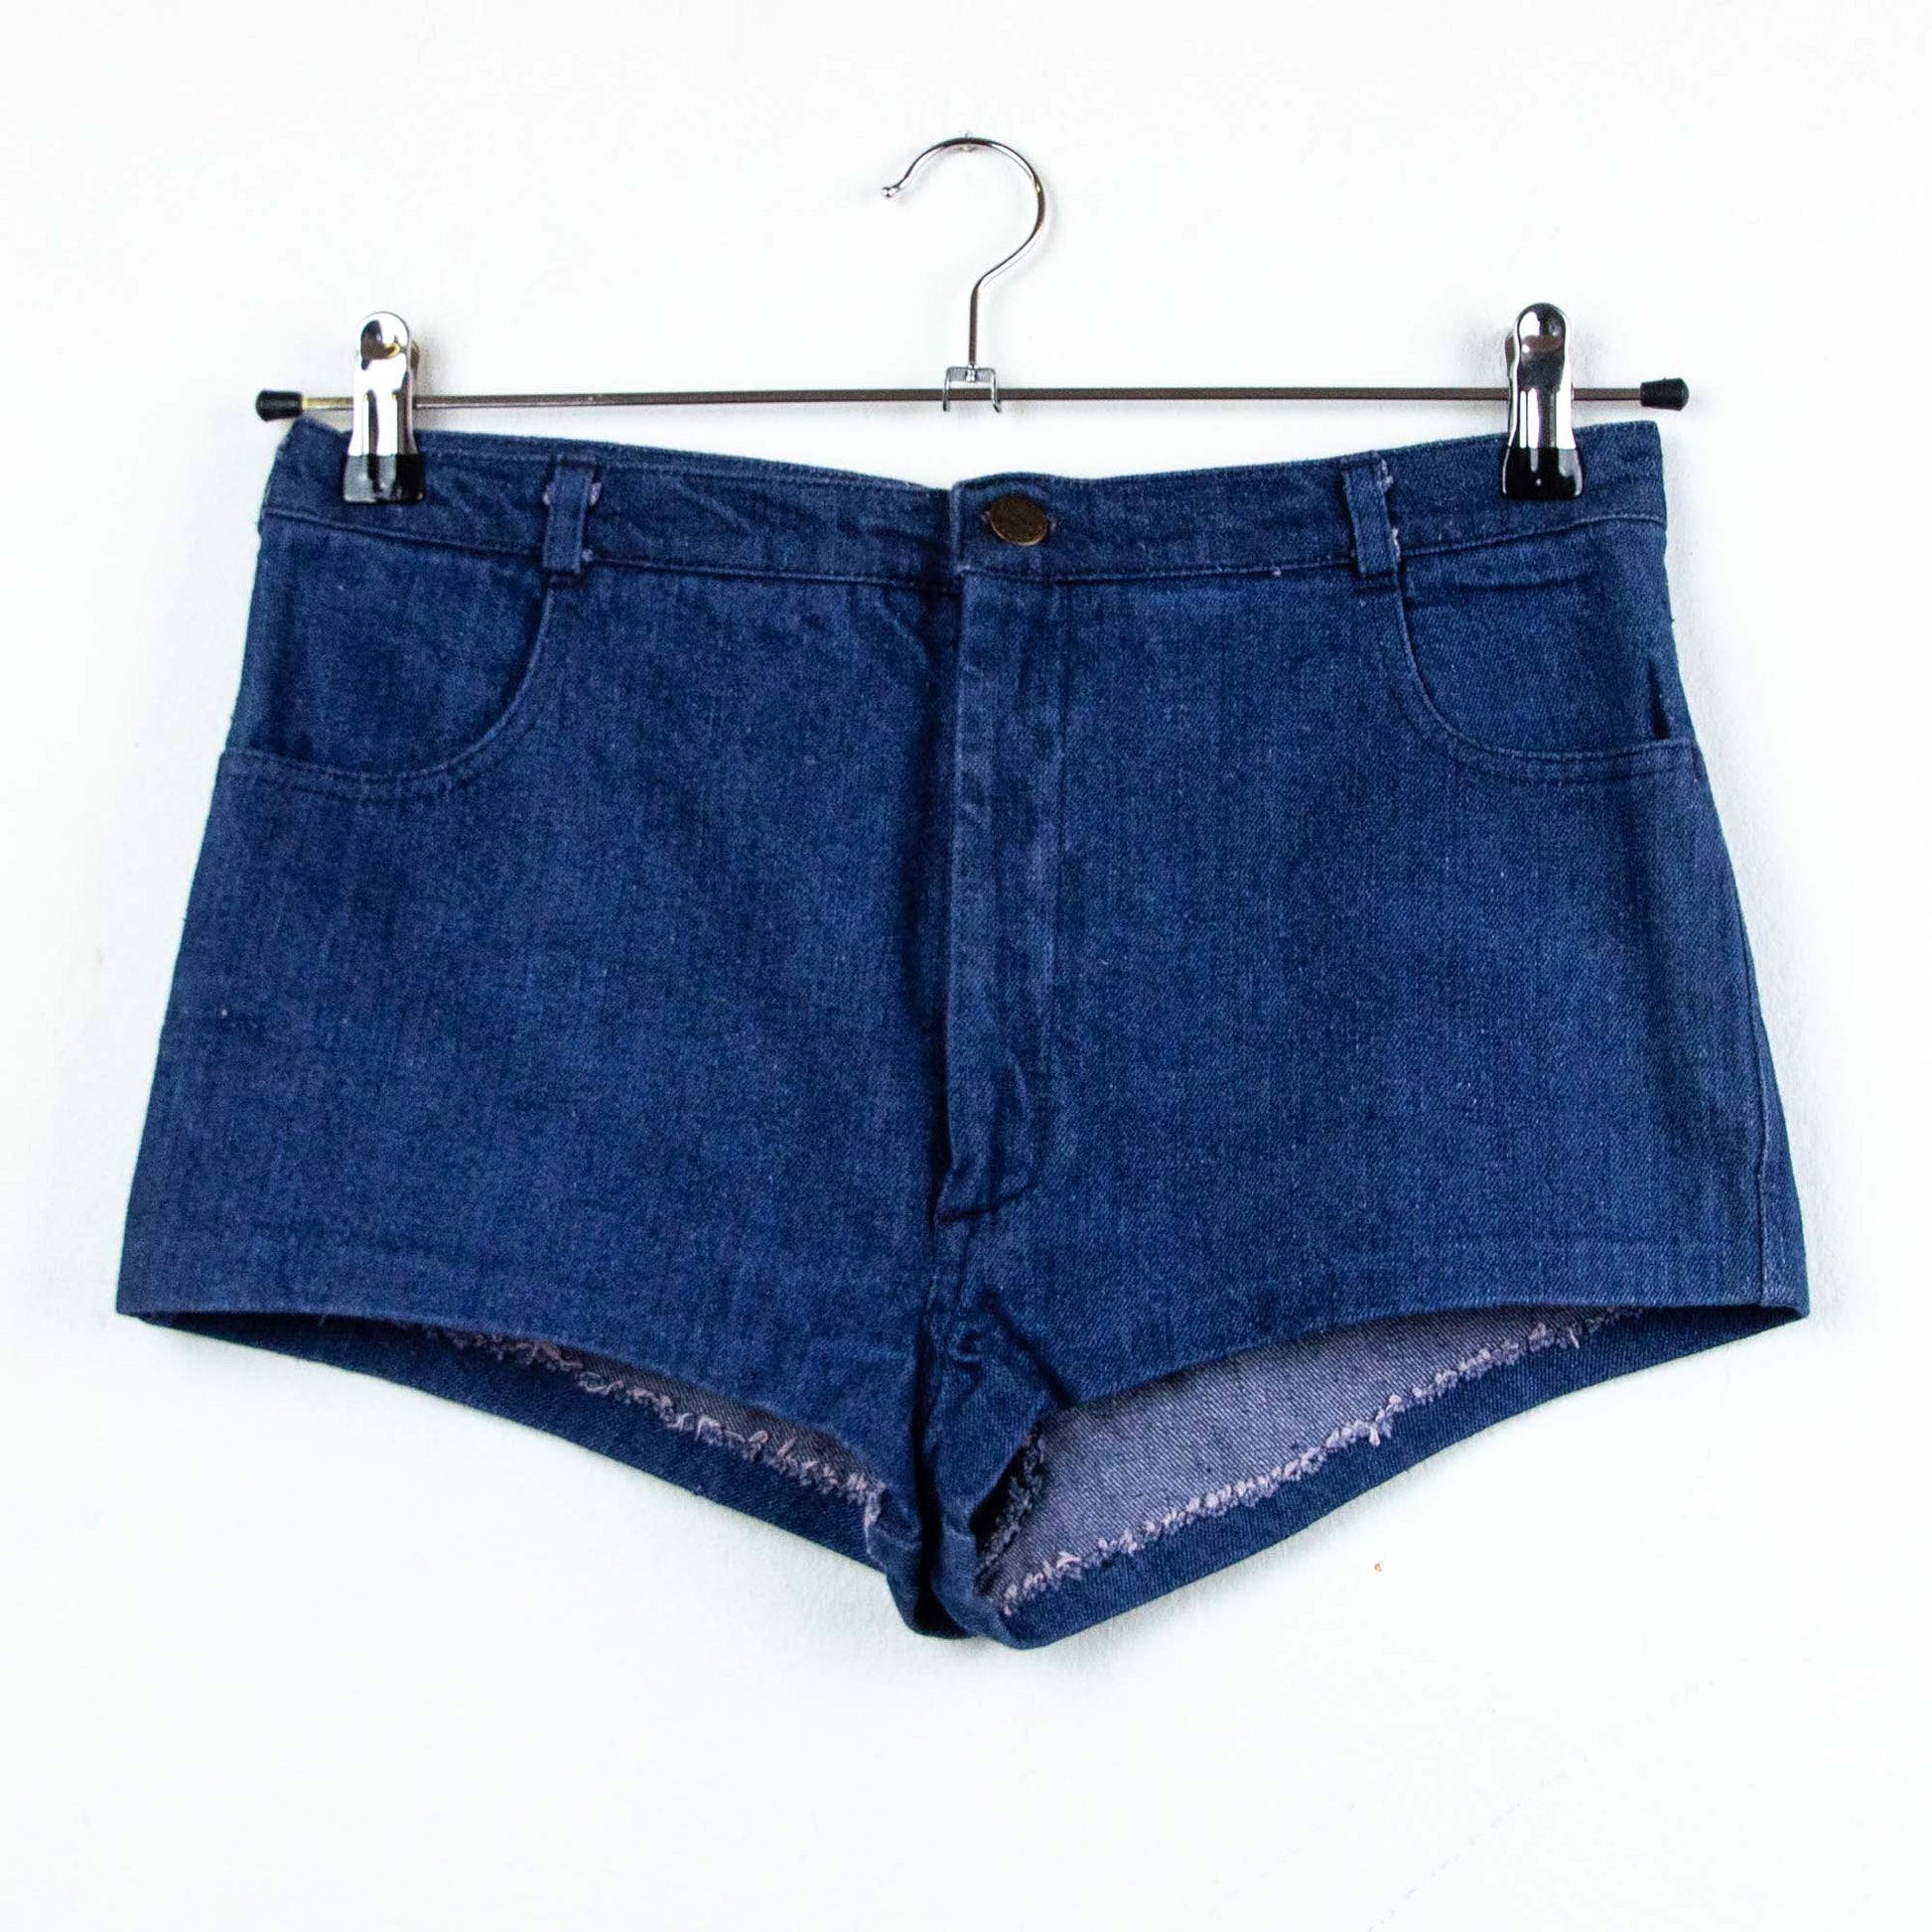 VIN-TR-18007 Vintage denim shorts M-L